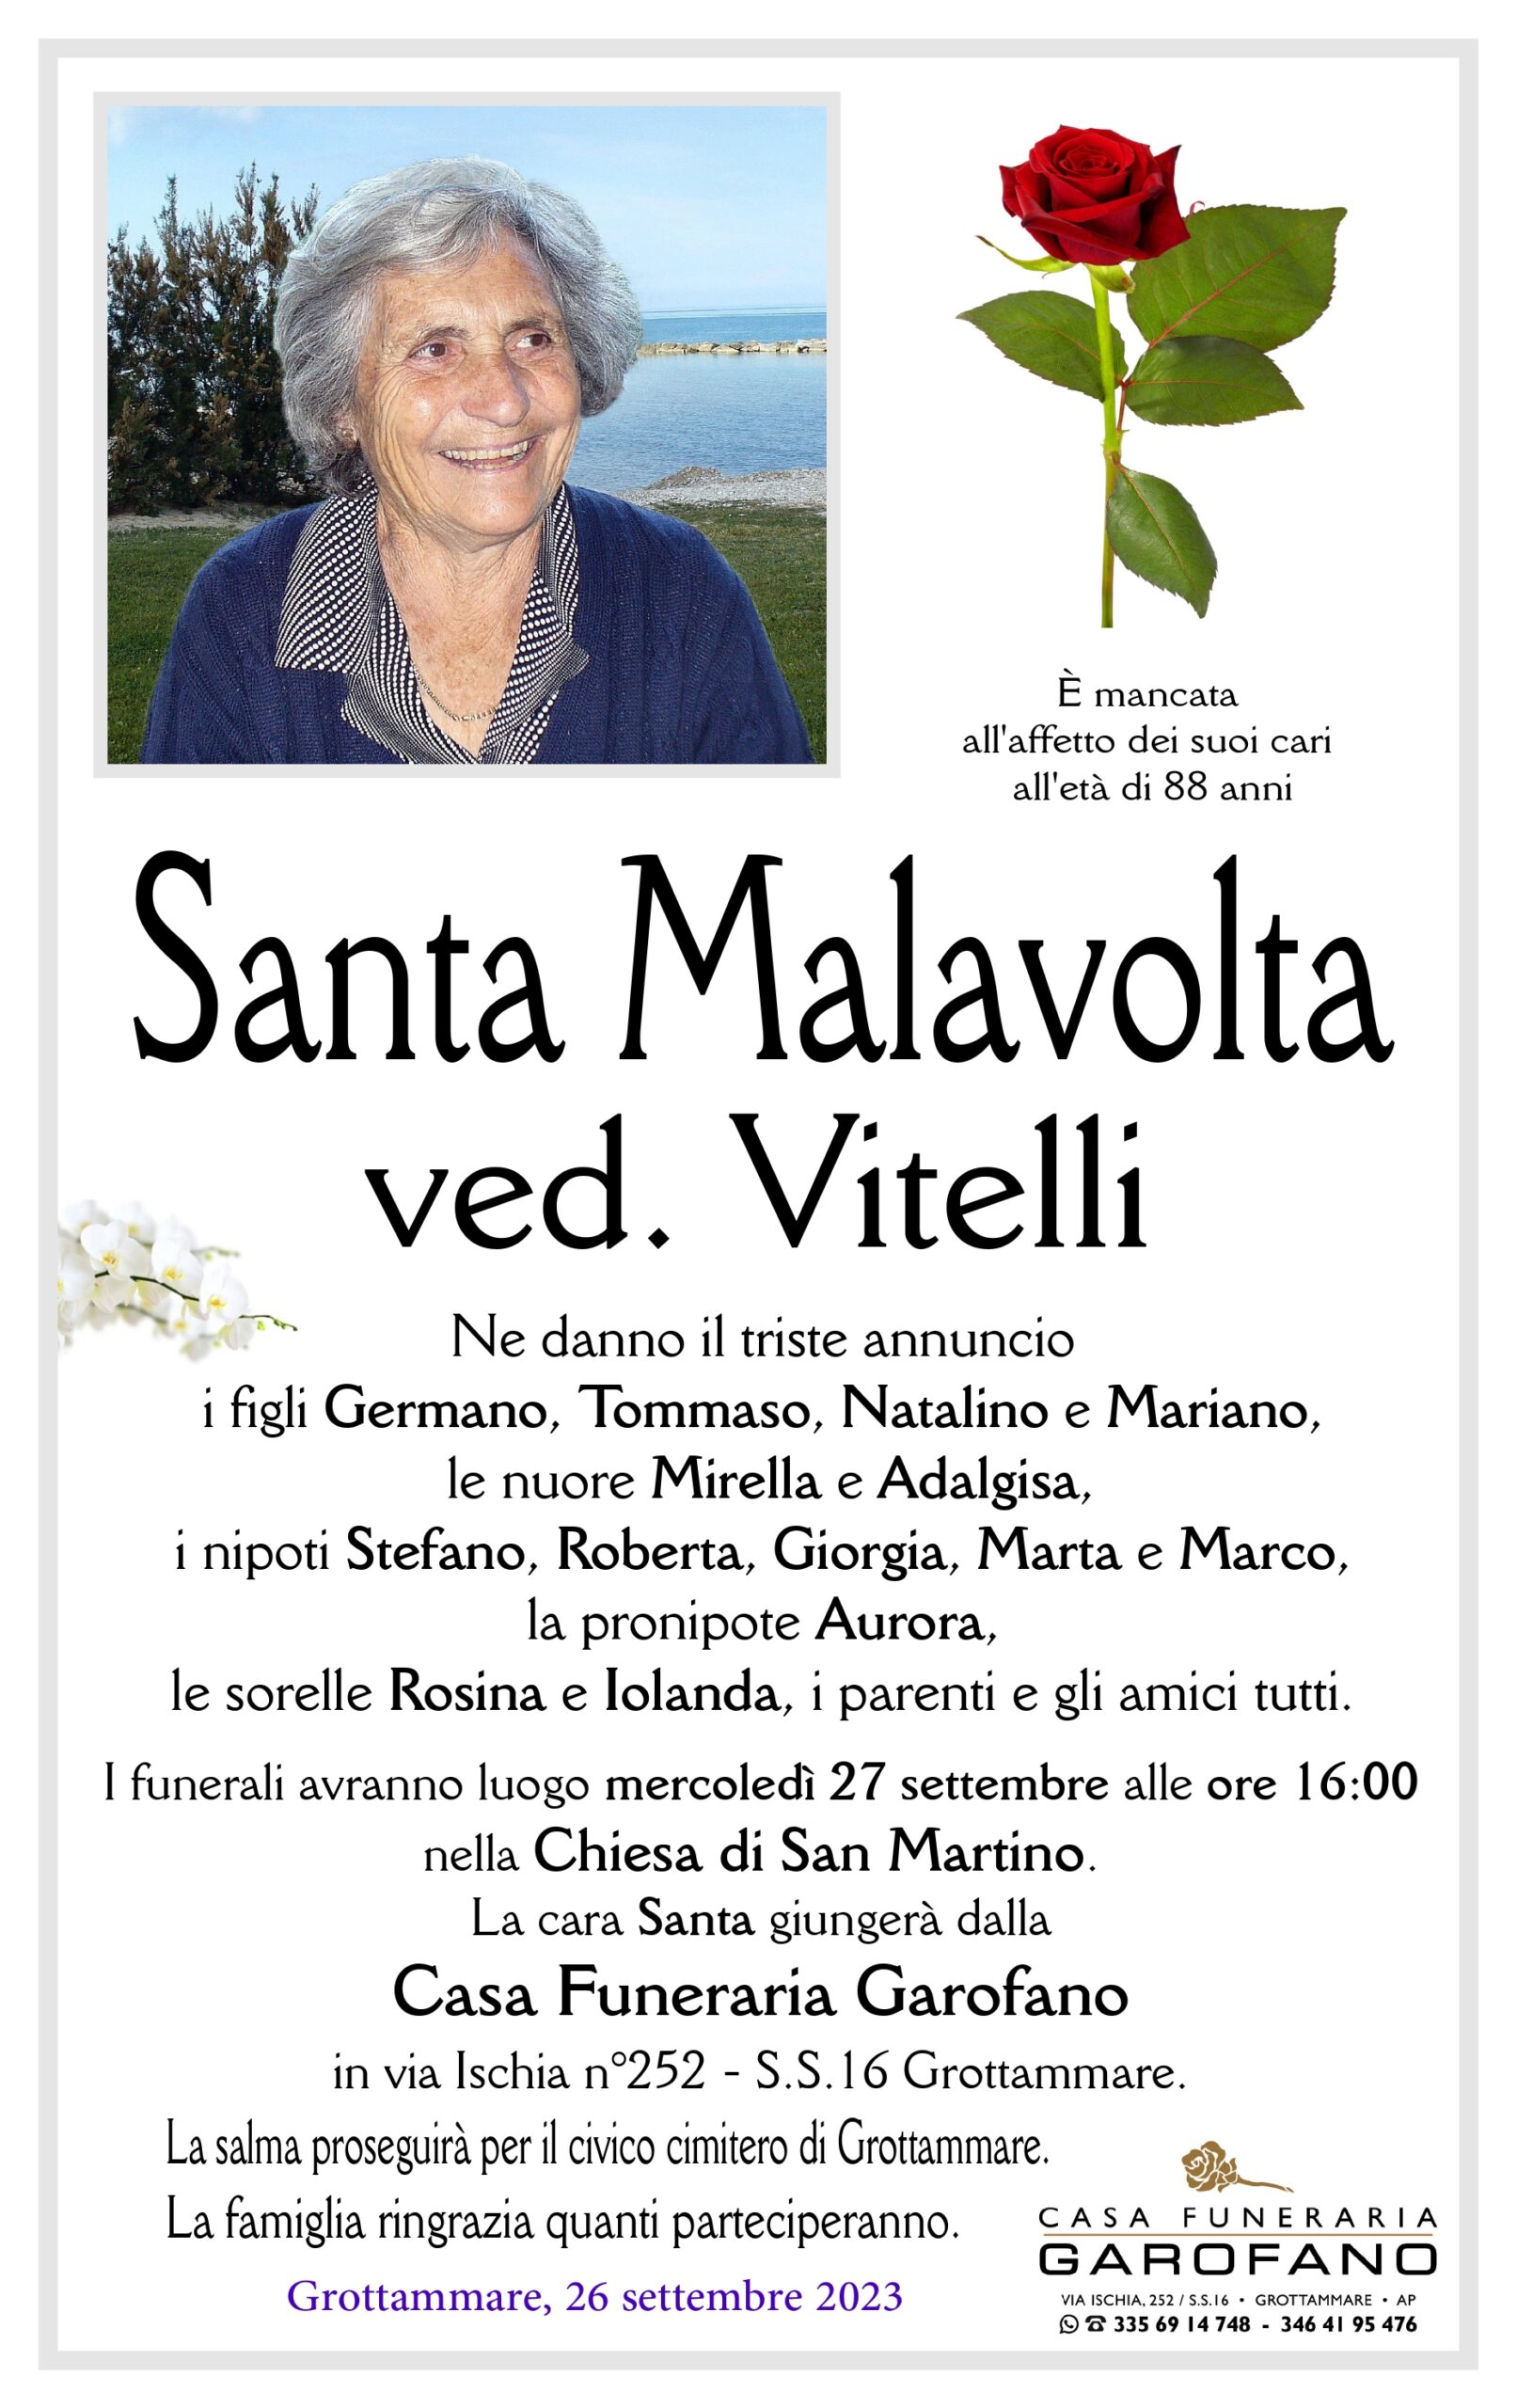 Santa Malavolta